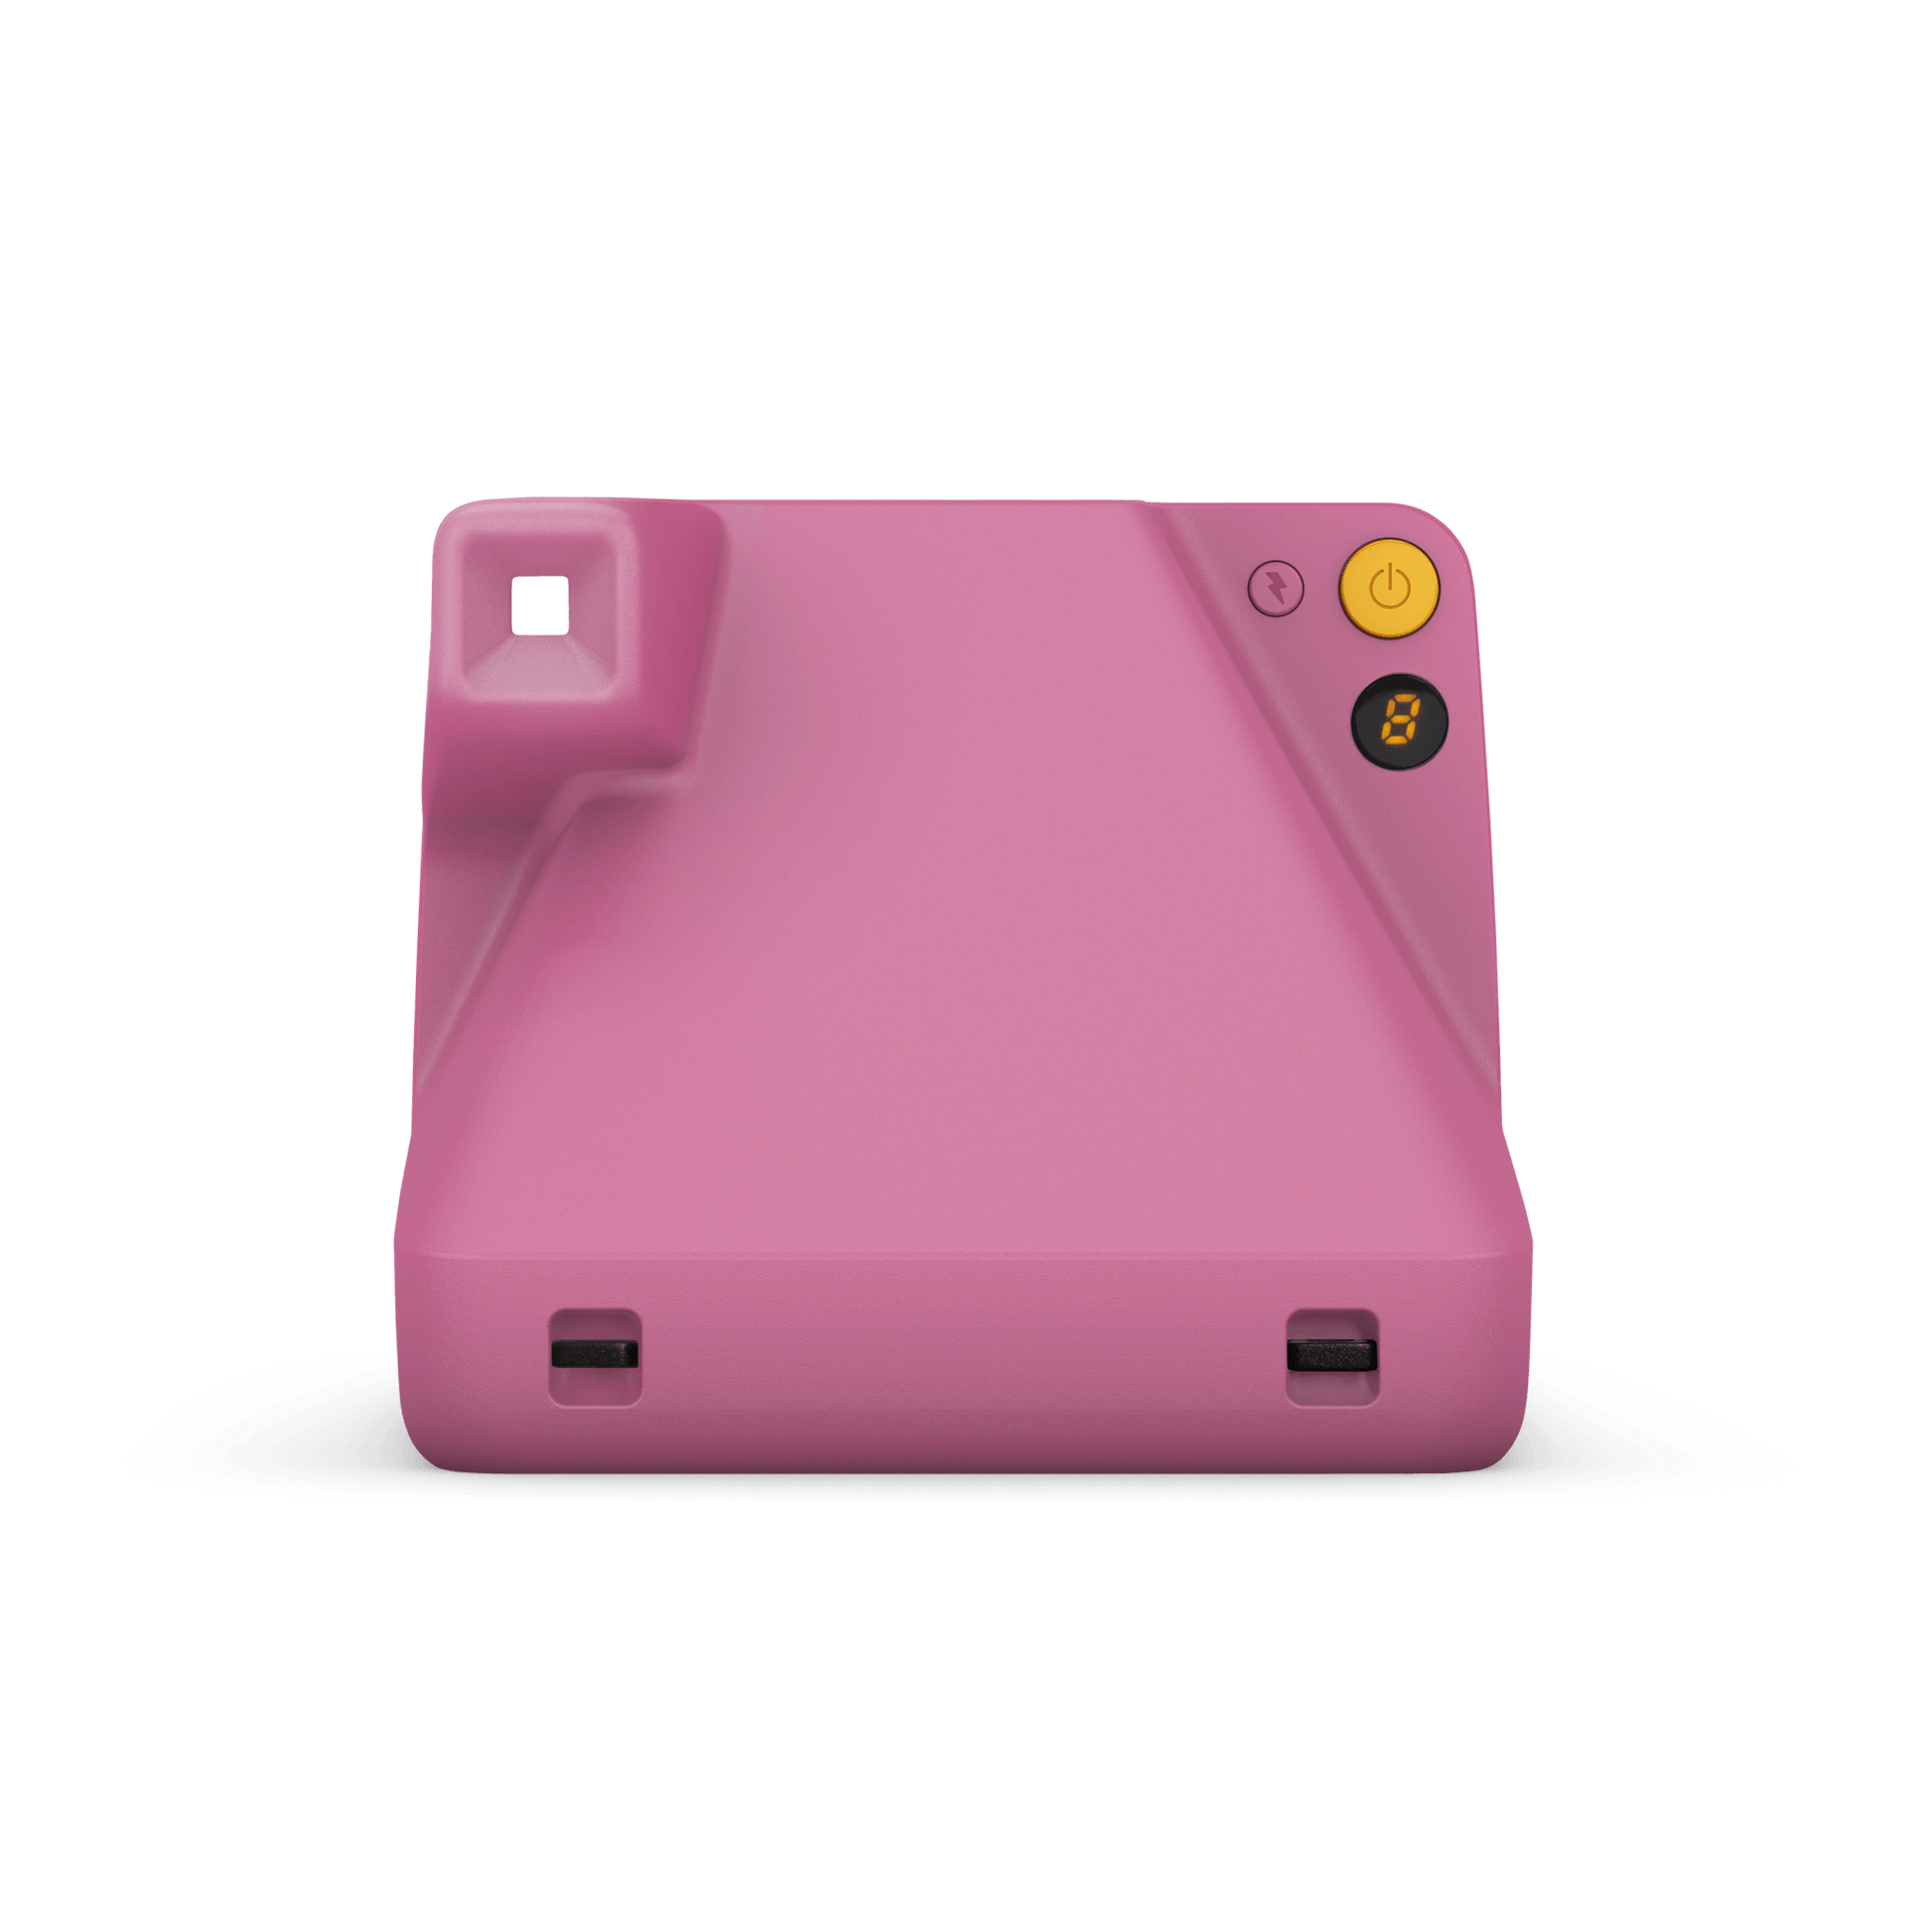 Polaroid Now 即影即有相機 i‑Type Instant Camera ｜ 自動對焦取代手對焦 - LINKO Shop